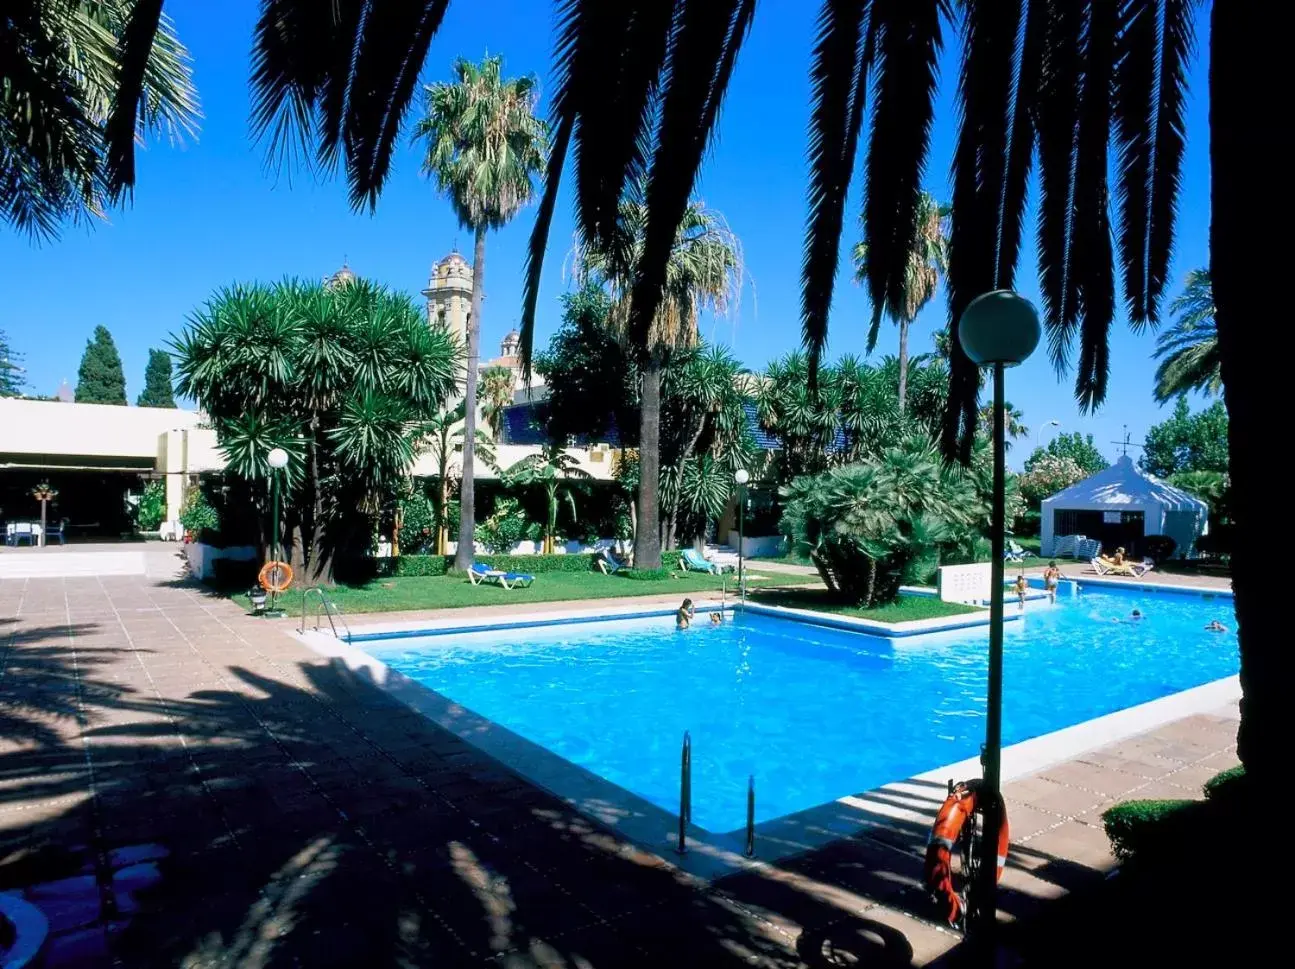 Swimming Pool in Parador de Ceuta